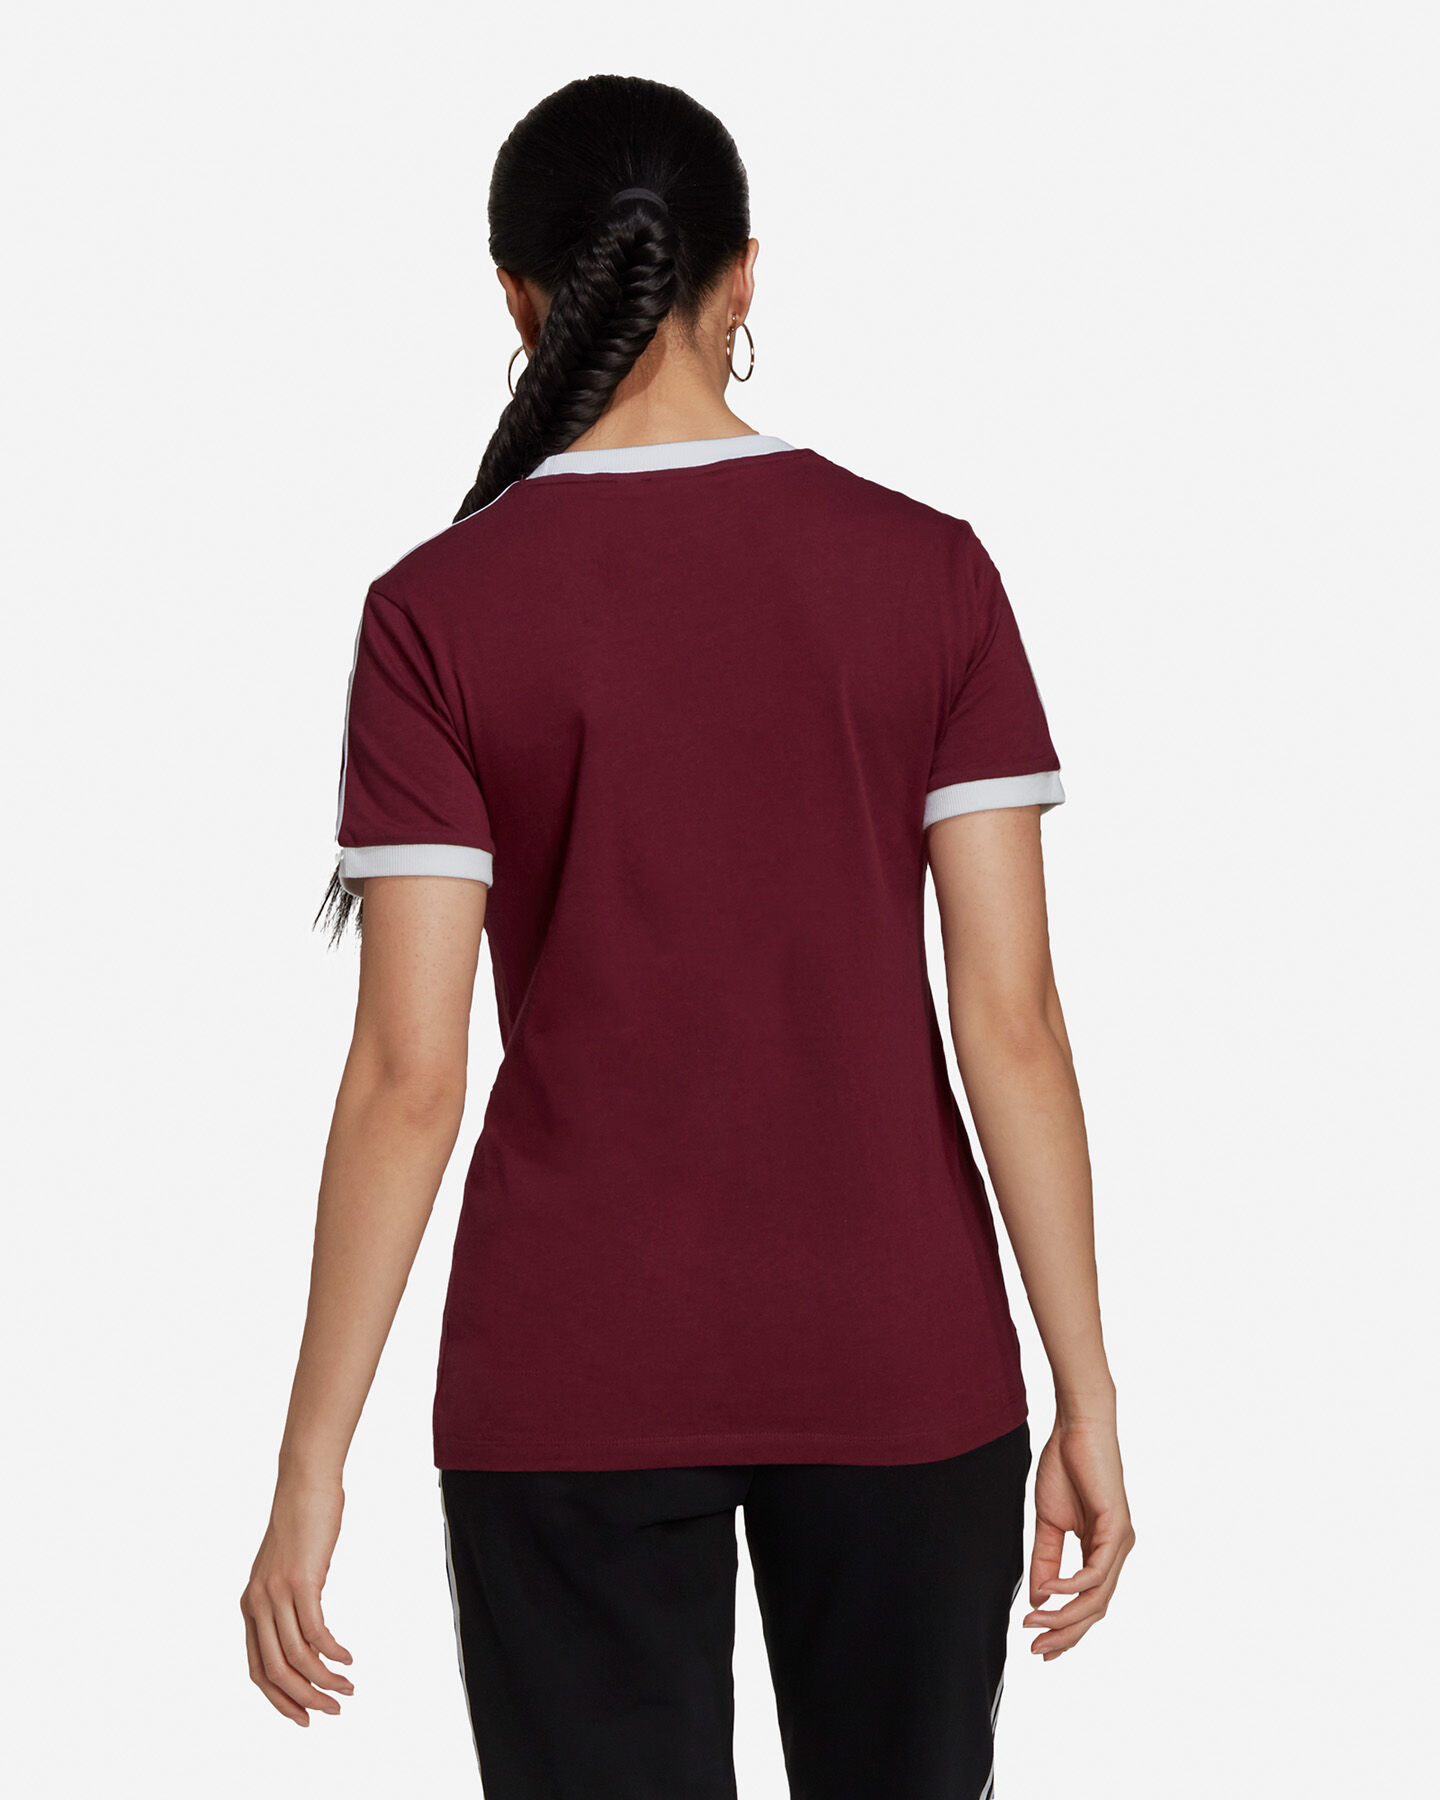  T-Shirt ADIDAS ORIGINALS 3STRIPES W S5324202|UNI|38 scatto 3